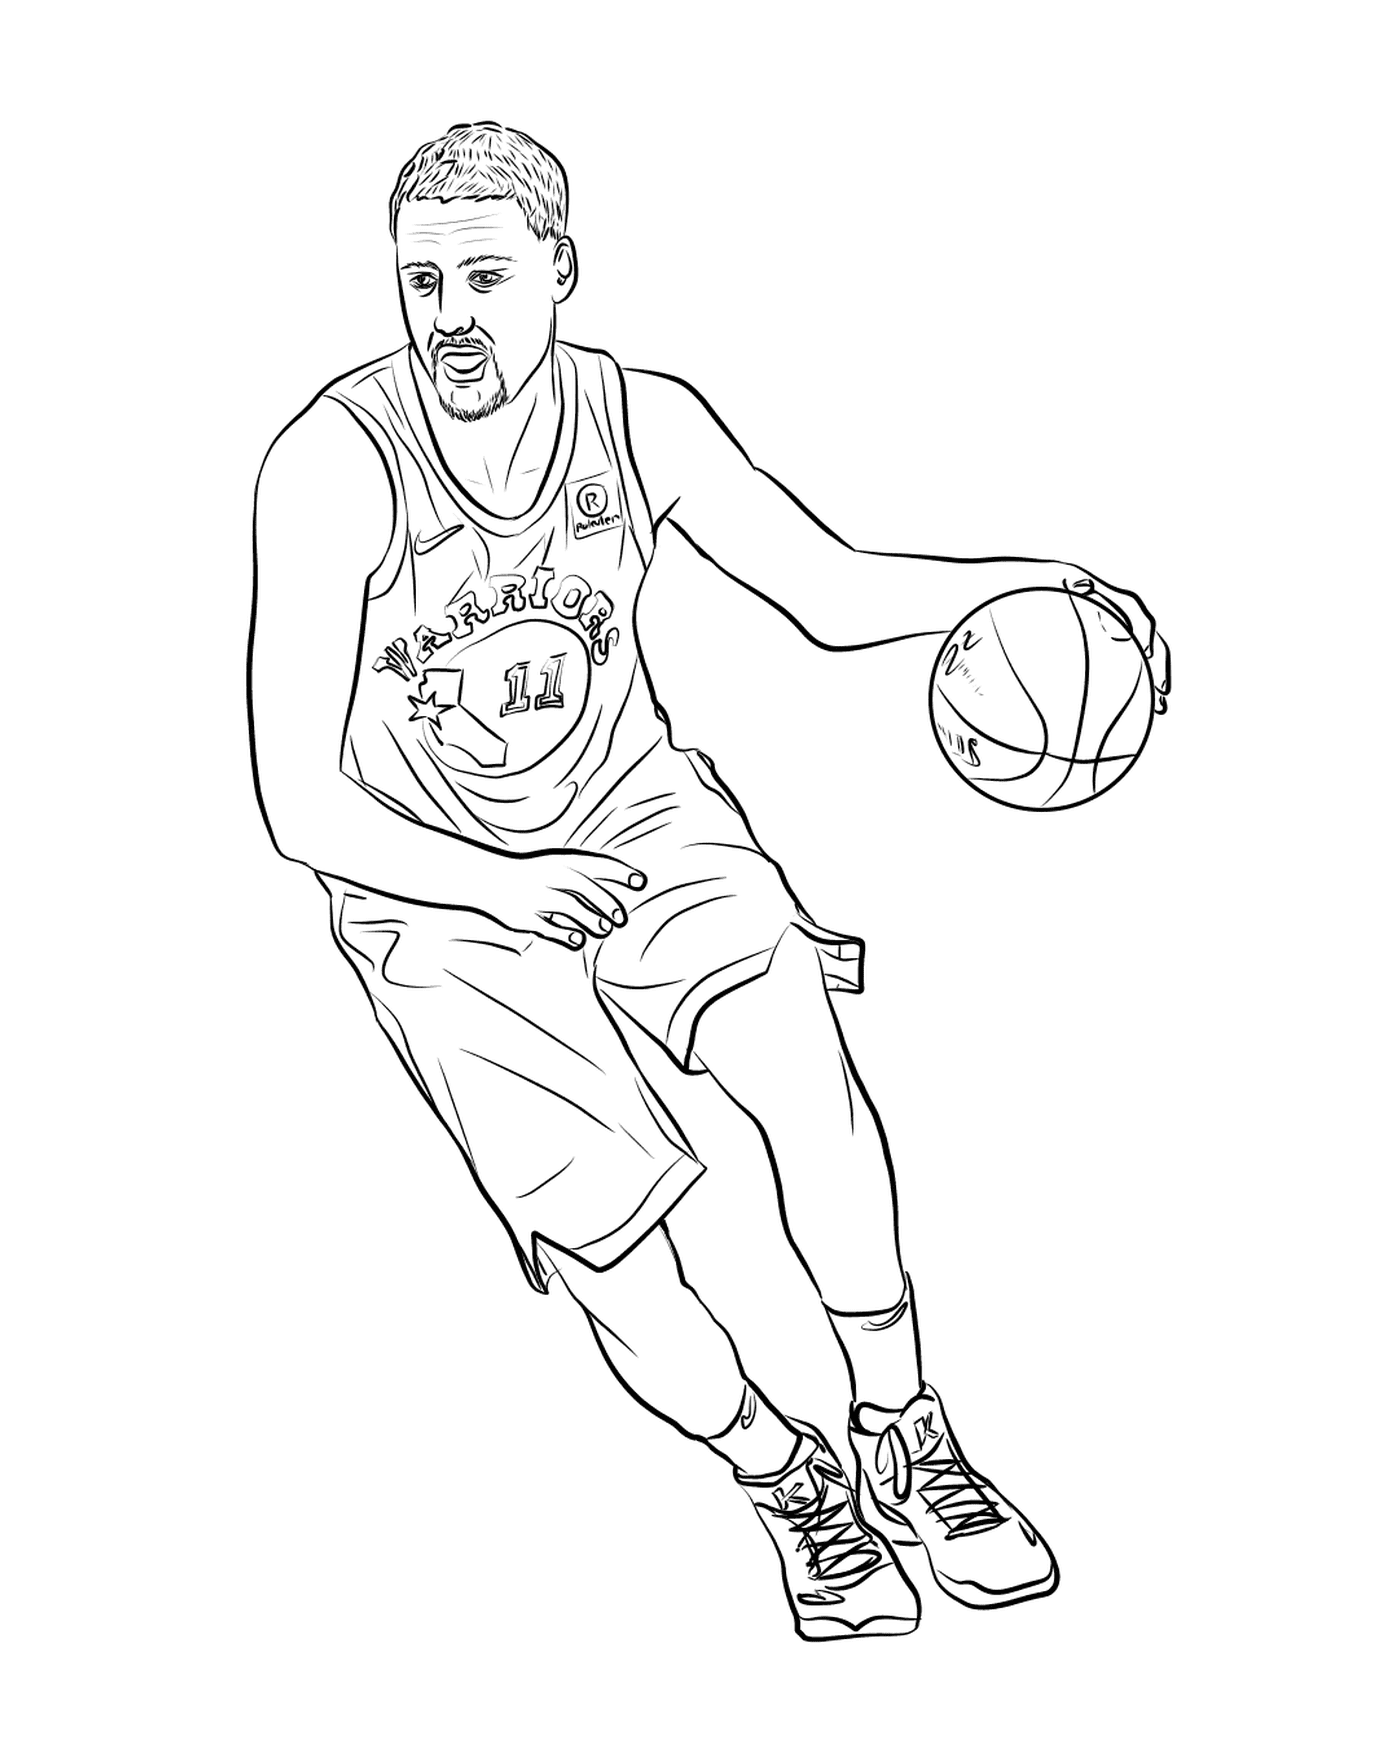  Klay Thompson of the NBA's Toronto Raptors 